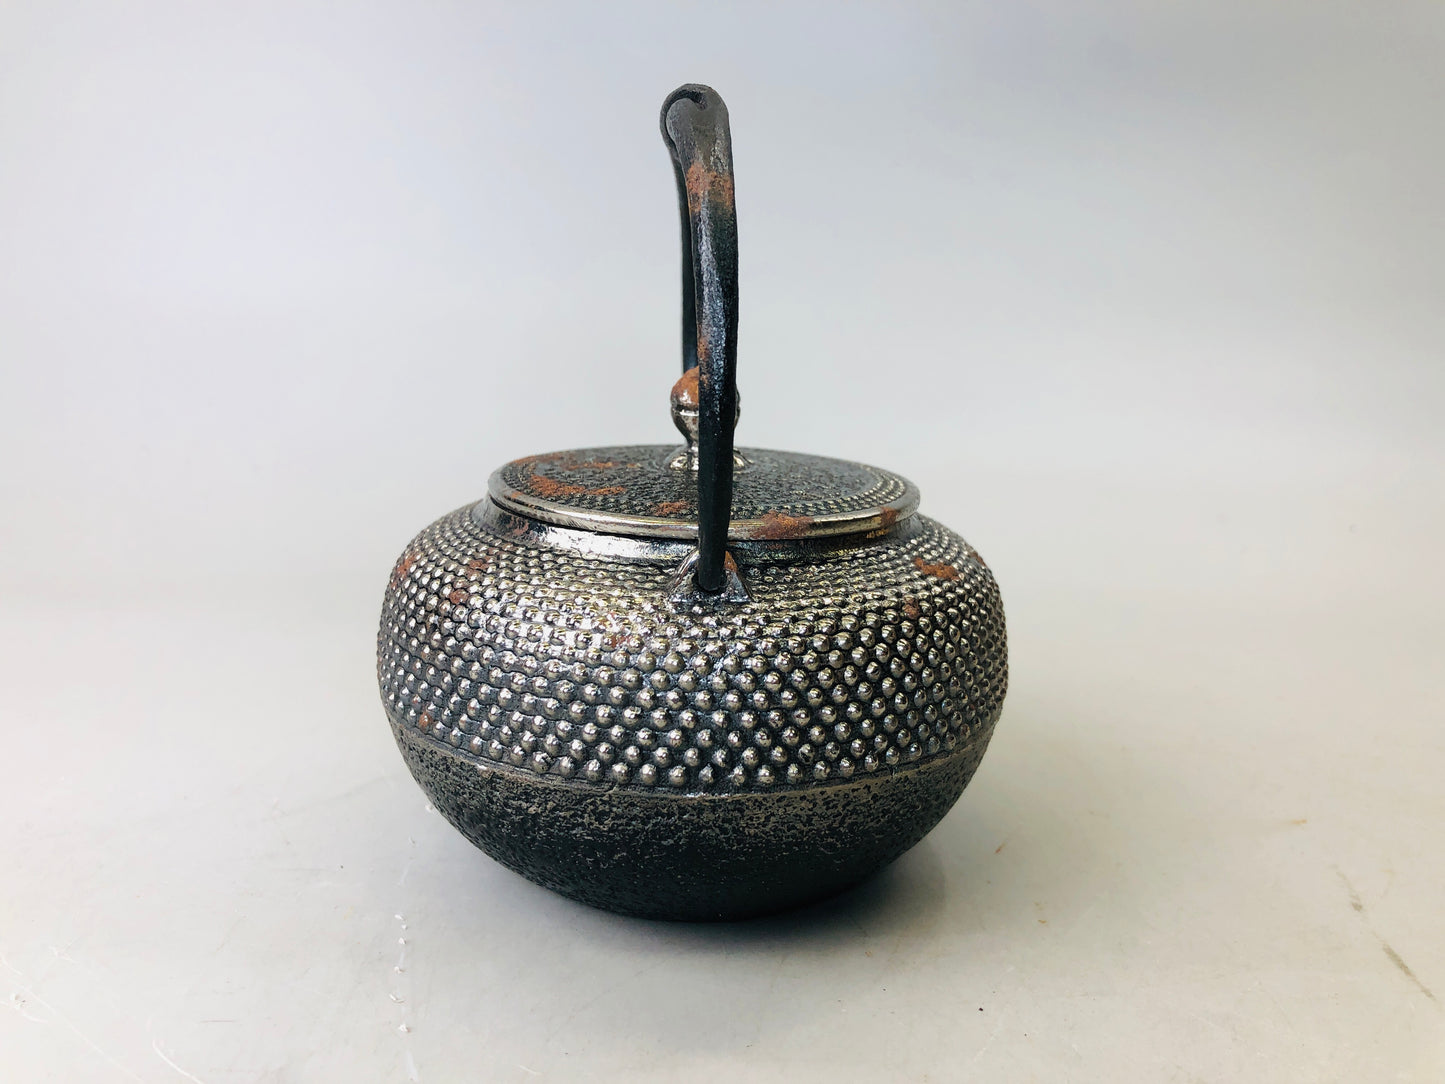 Y6198 [VIDEO] KYUSU Iron sand teapot pot signed box Japan antique tea ceremony kettle